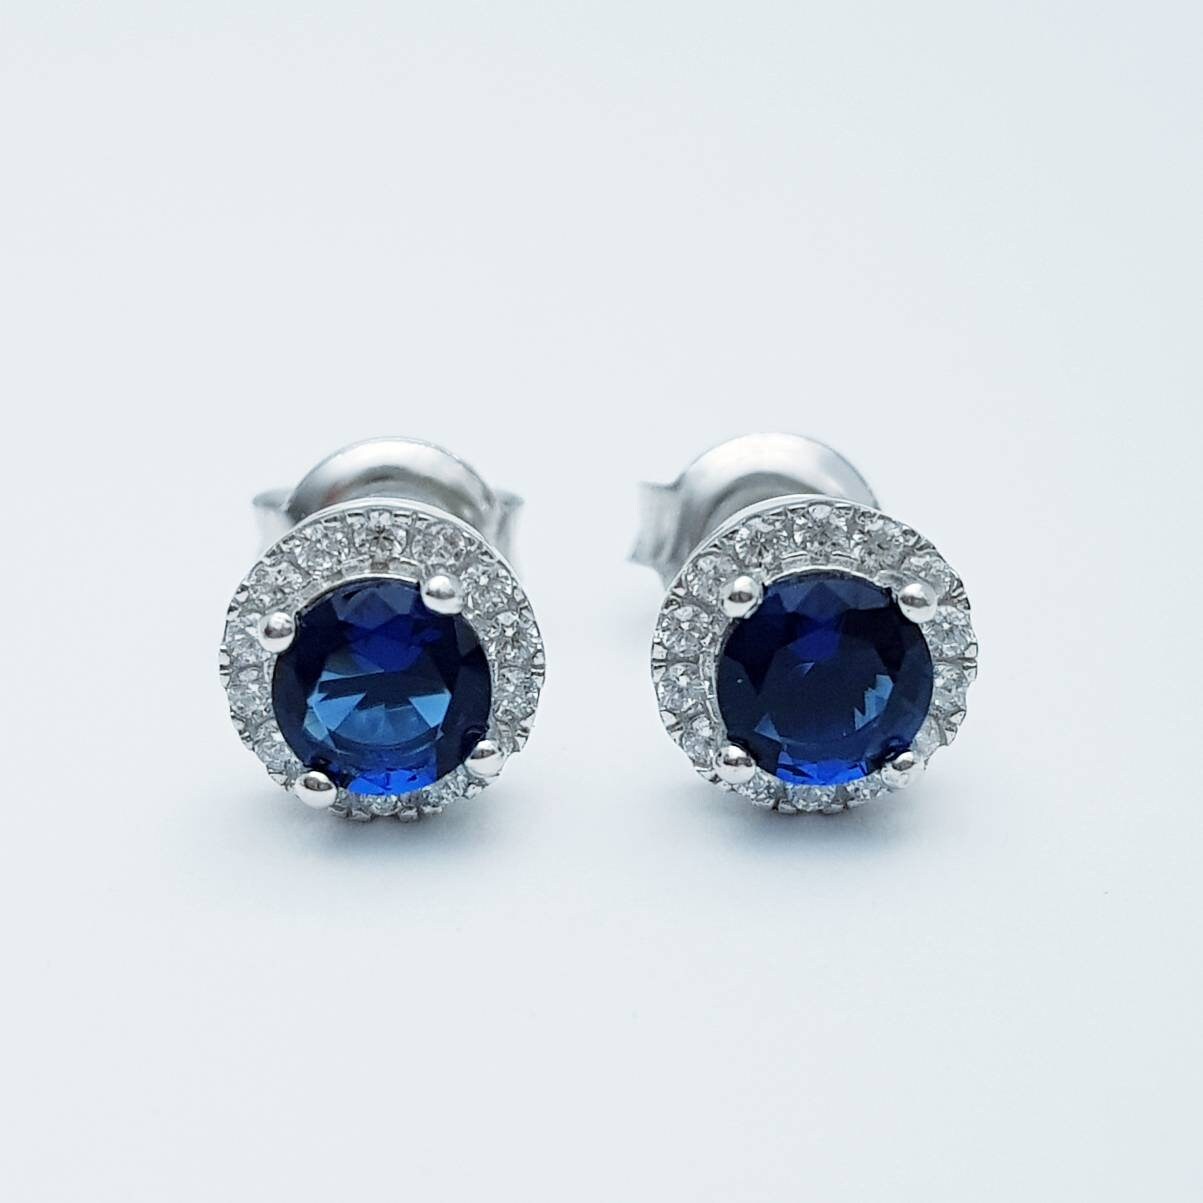 Small blue earrings, sapphire stud earrings, small stud earrings, vintage earrings, diamond halo earrings, September birthstone studs